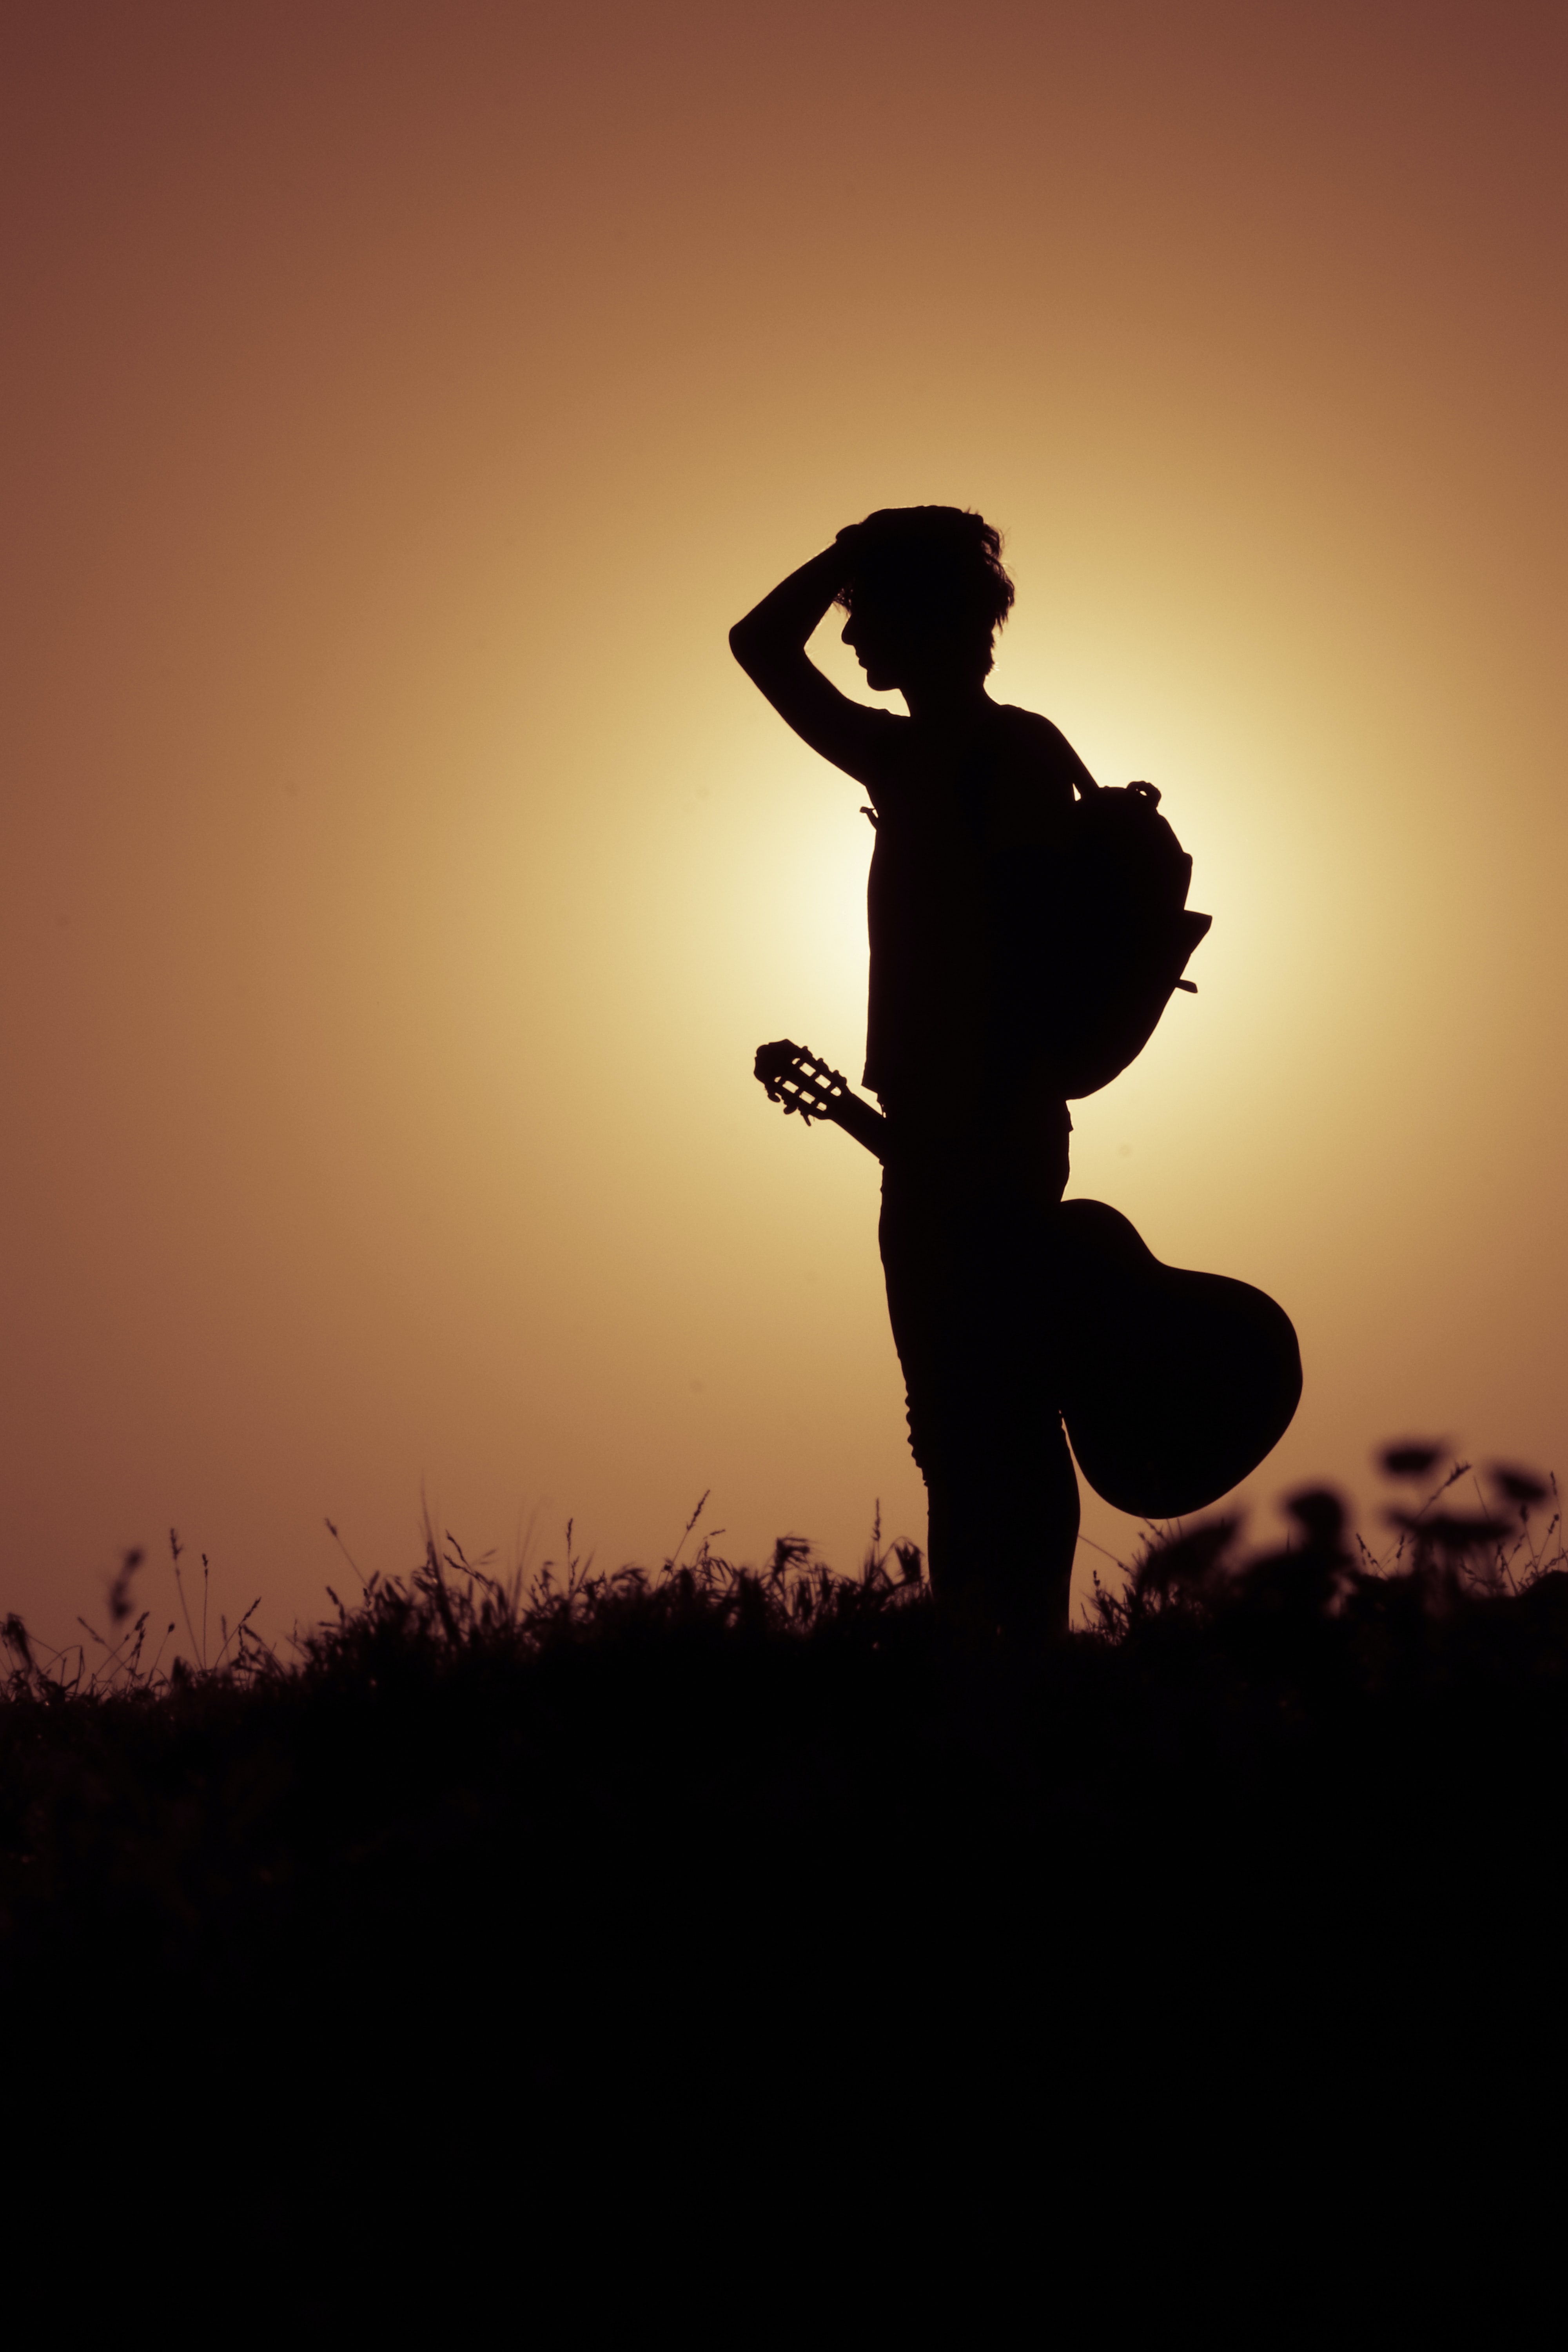 guitar, musician, musical instrument, sunset, silhouette, miscellanea, miscellaneous High Definition image